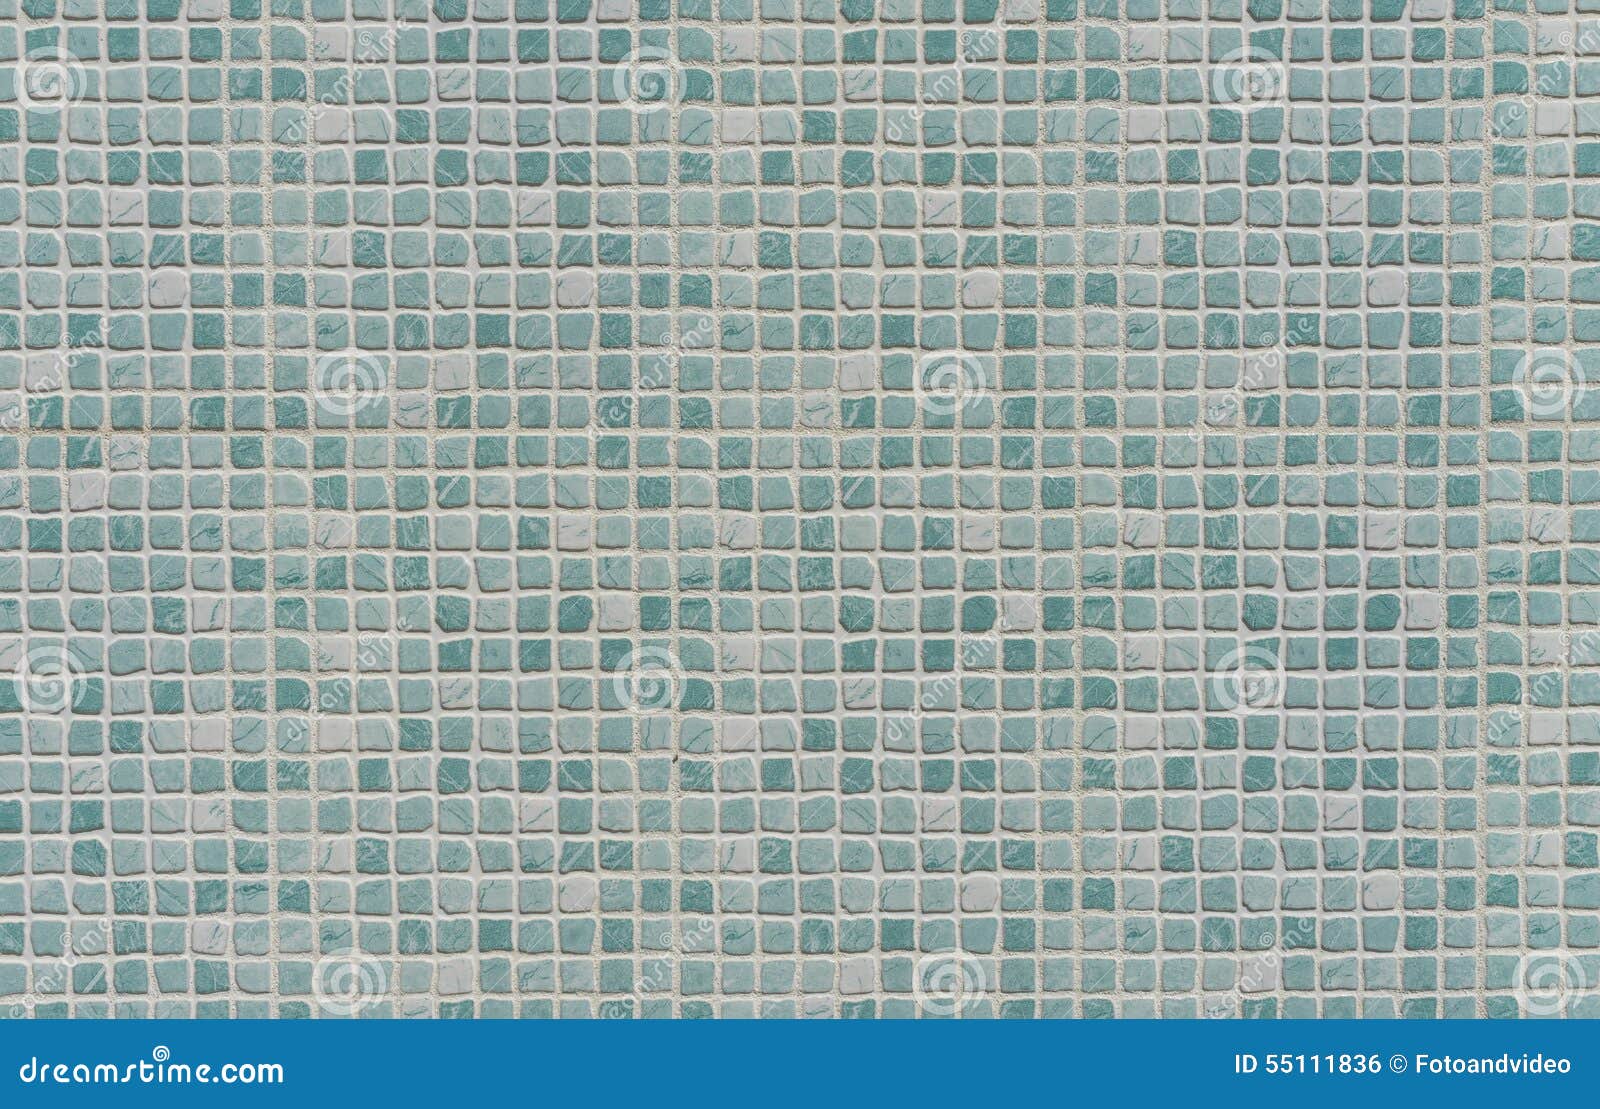 Blue Colored Mosaic Tiles Wall Stock Photo - Image of close, mosaic ...